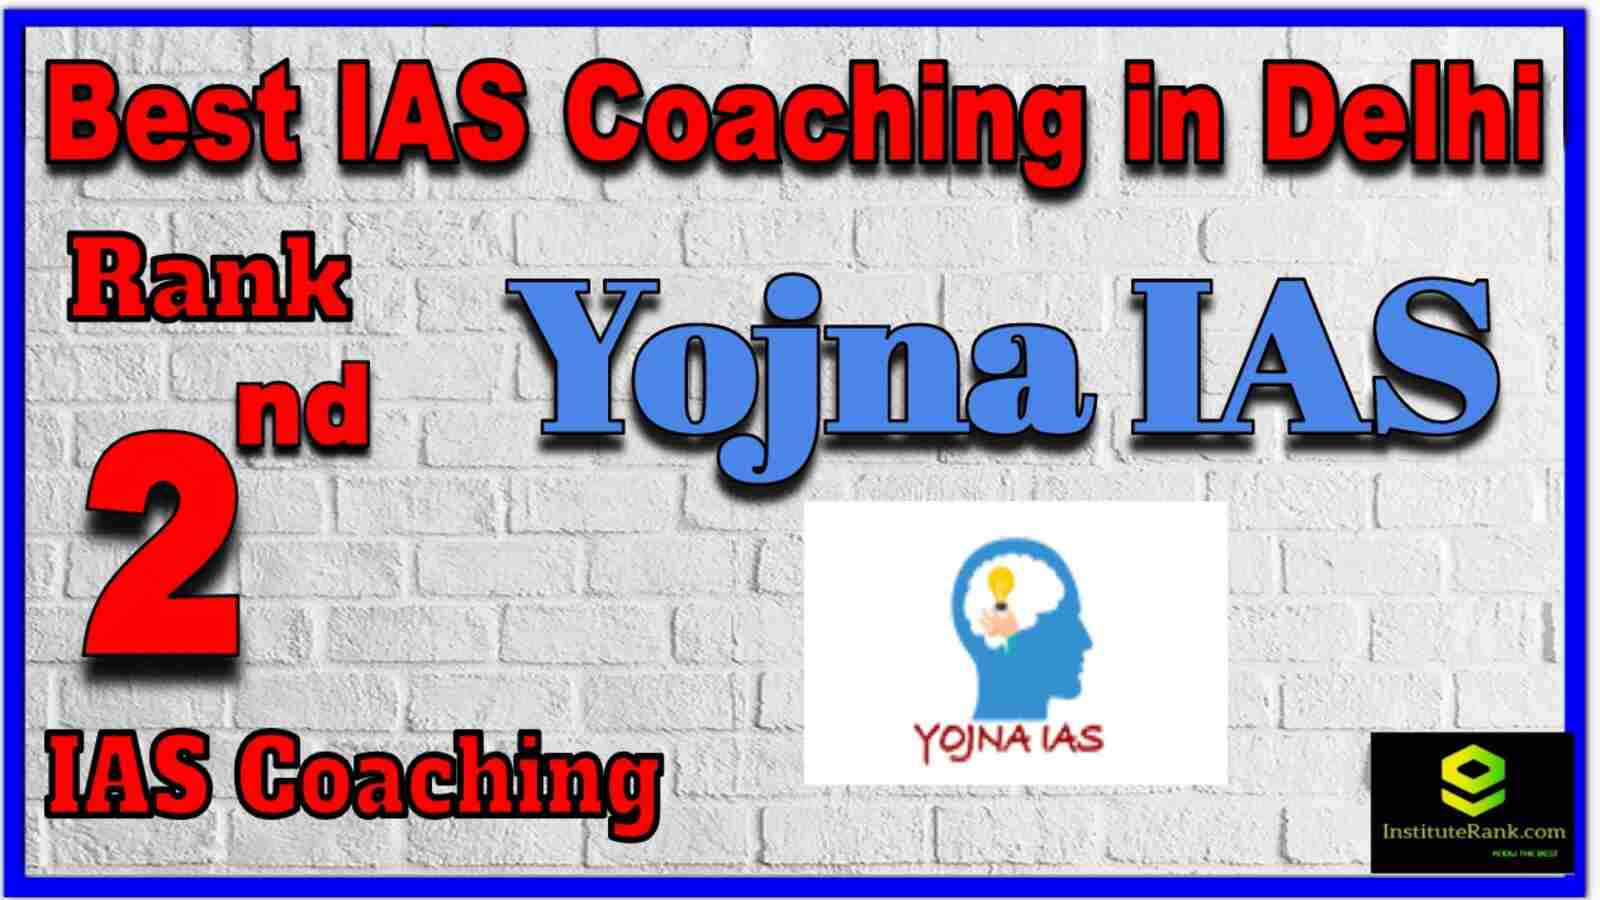 Rank 2 Best IAS Coaching in Delhi